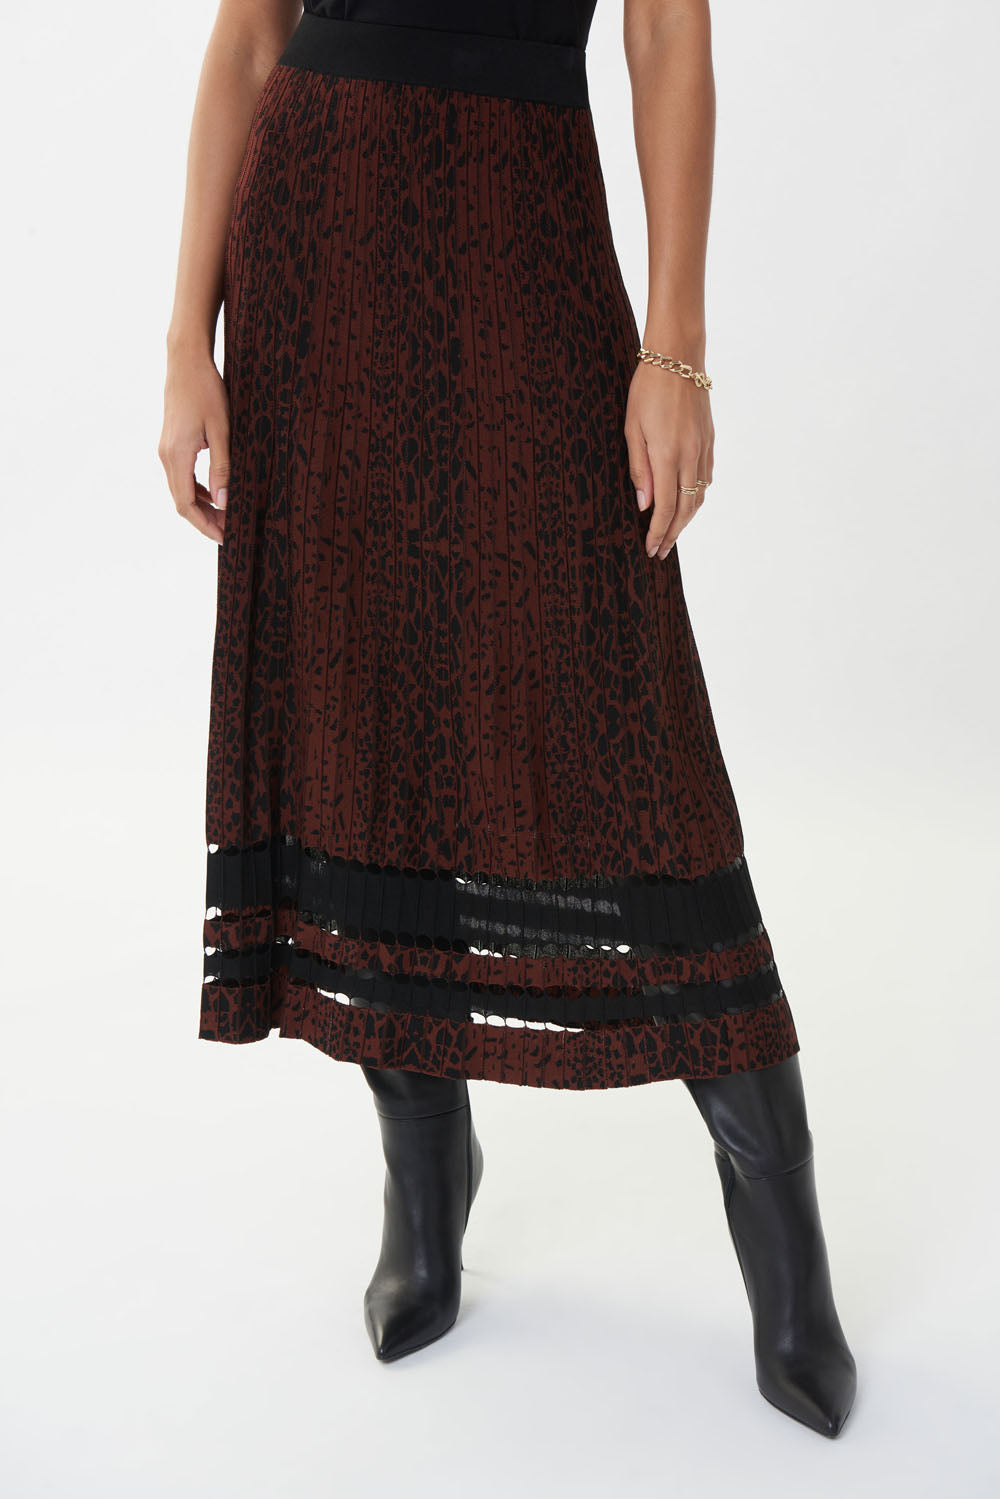 Joseph Ribkoff Black-Brown Jacquard Skirt Style 223960